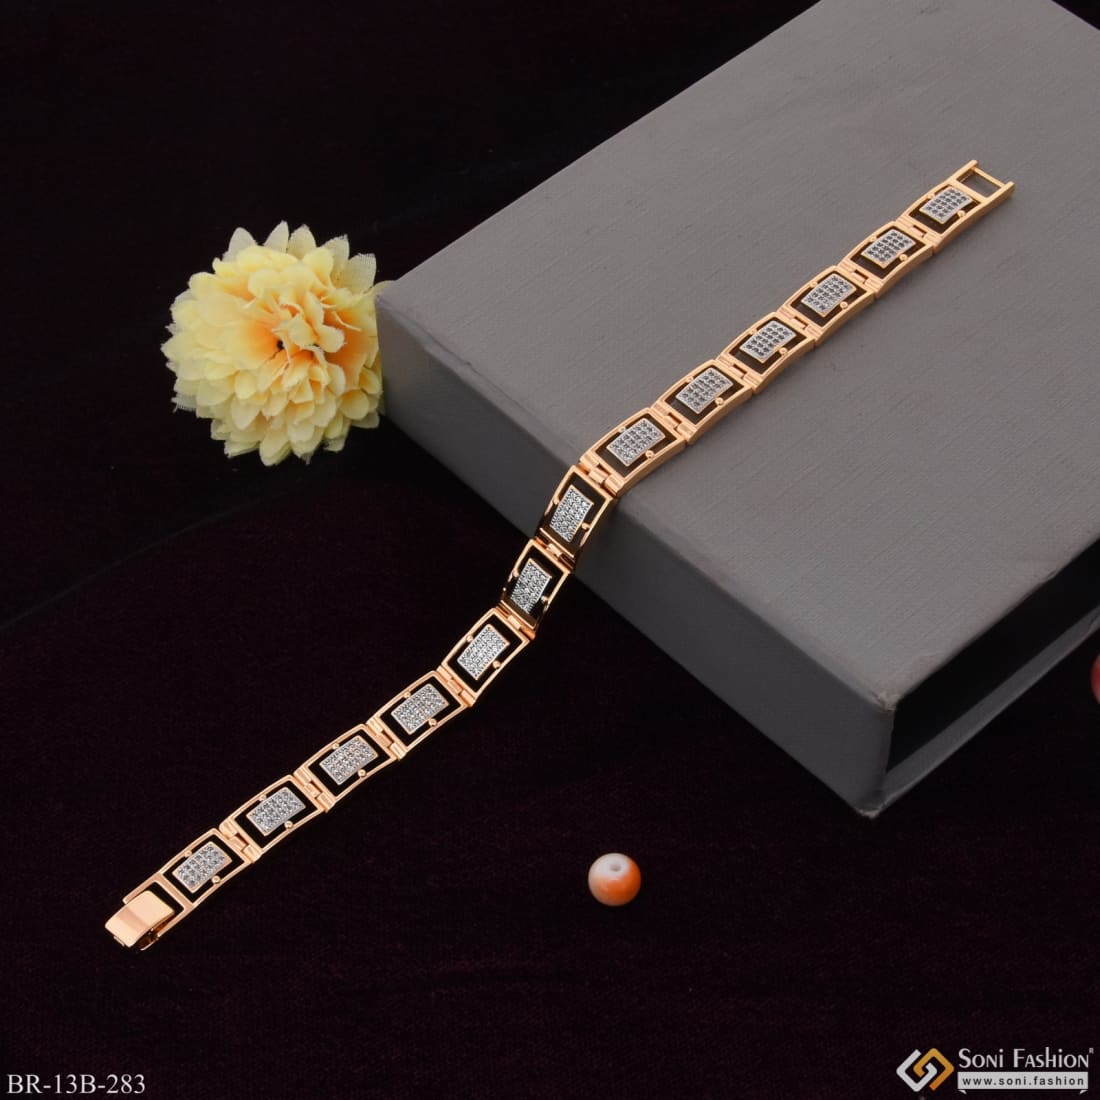 Expensive-Looking Design High-Quality Gold Plated Bracelet for Men - Style  C619, गोल्ड प्लेटेड ब्रेसलेट - Soni Fashion, Rajkot | ID: 2851883962897